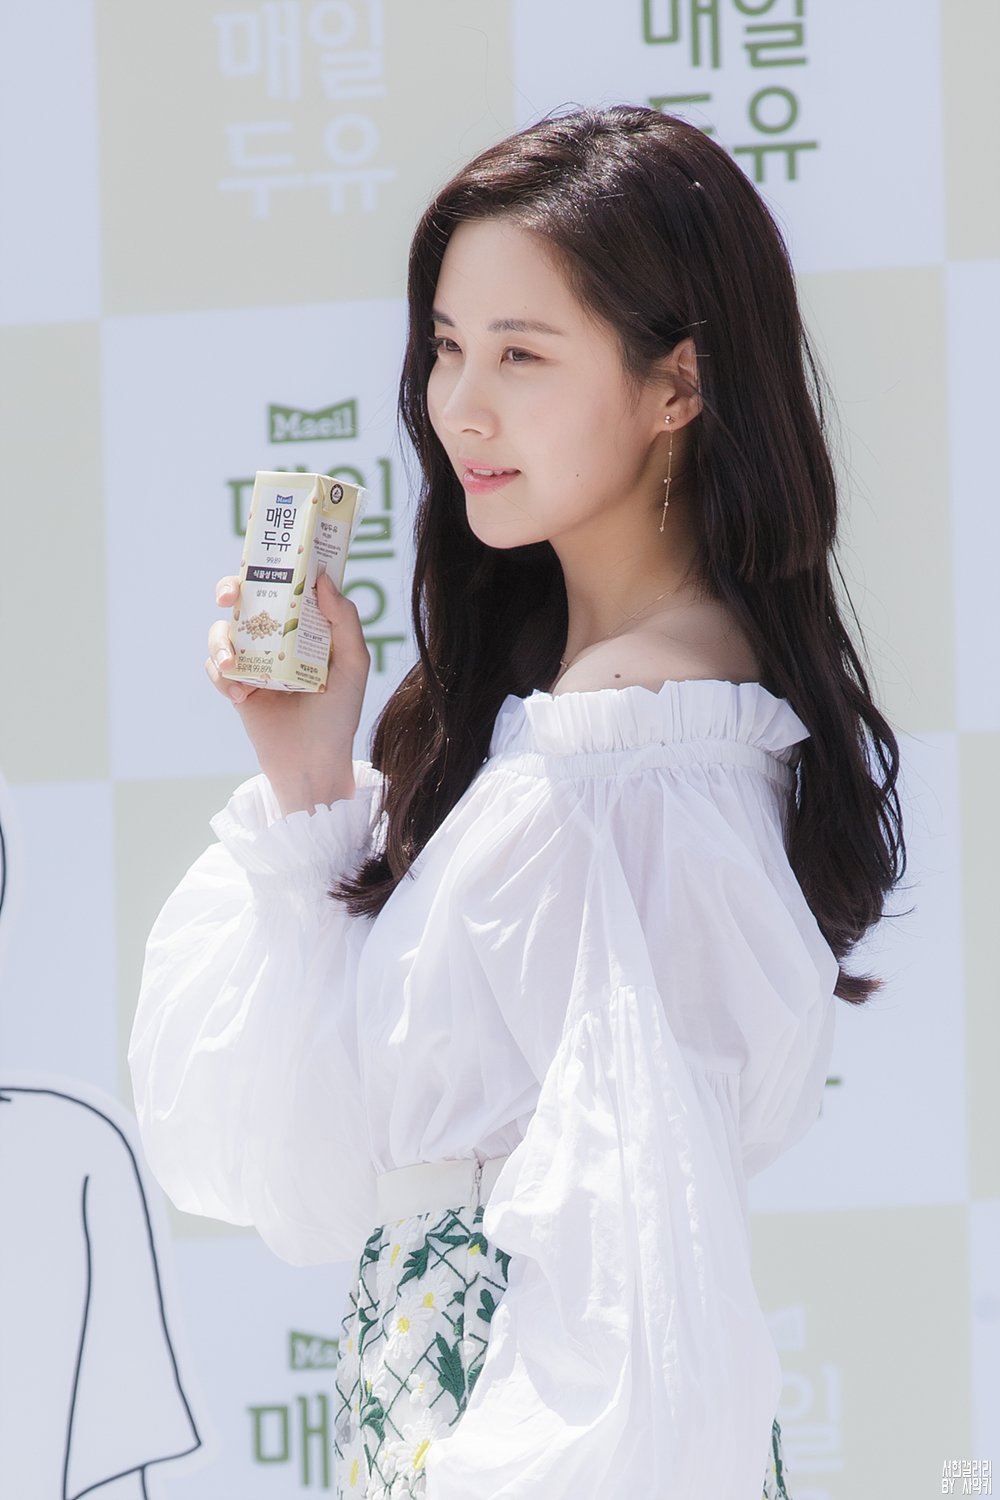  [PIC][03-06-2017]SeoHyun tham dự sự kiện “City Forestival - Maeil Duyou 'Confidence Diary'” vào chiều nay - Page 4 MuFFFdyvOi-3000x3000